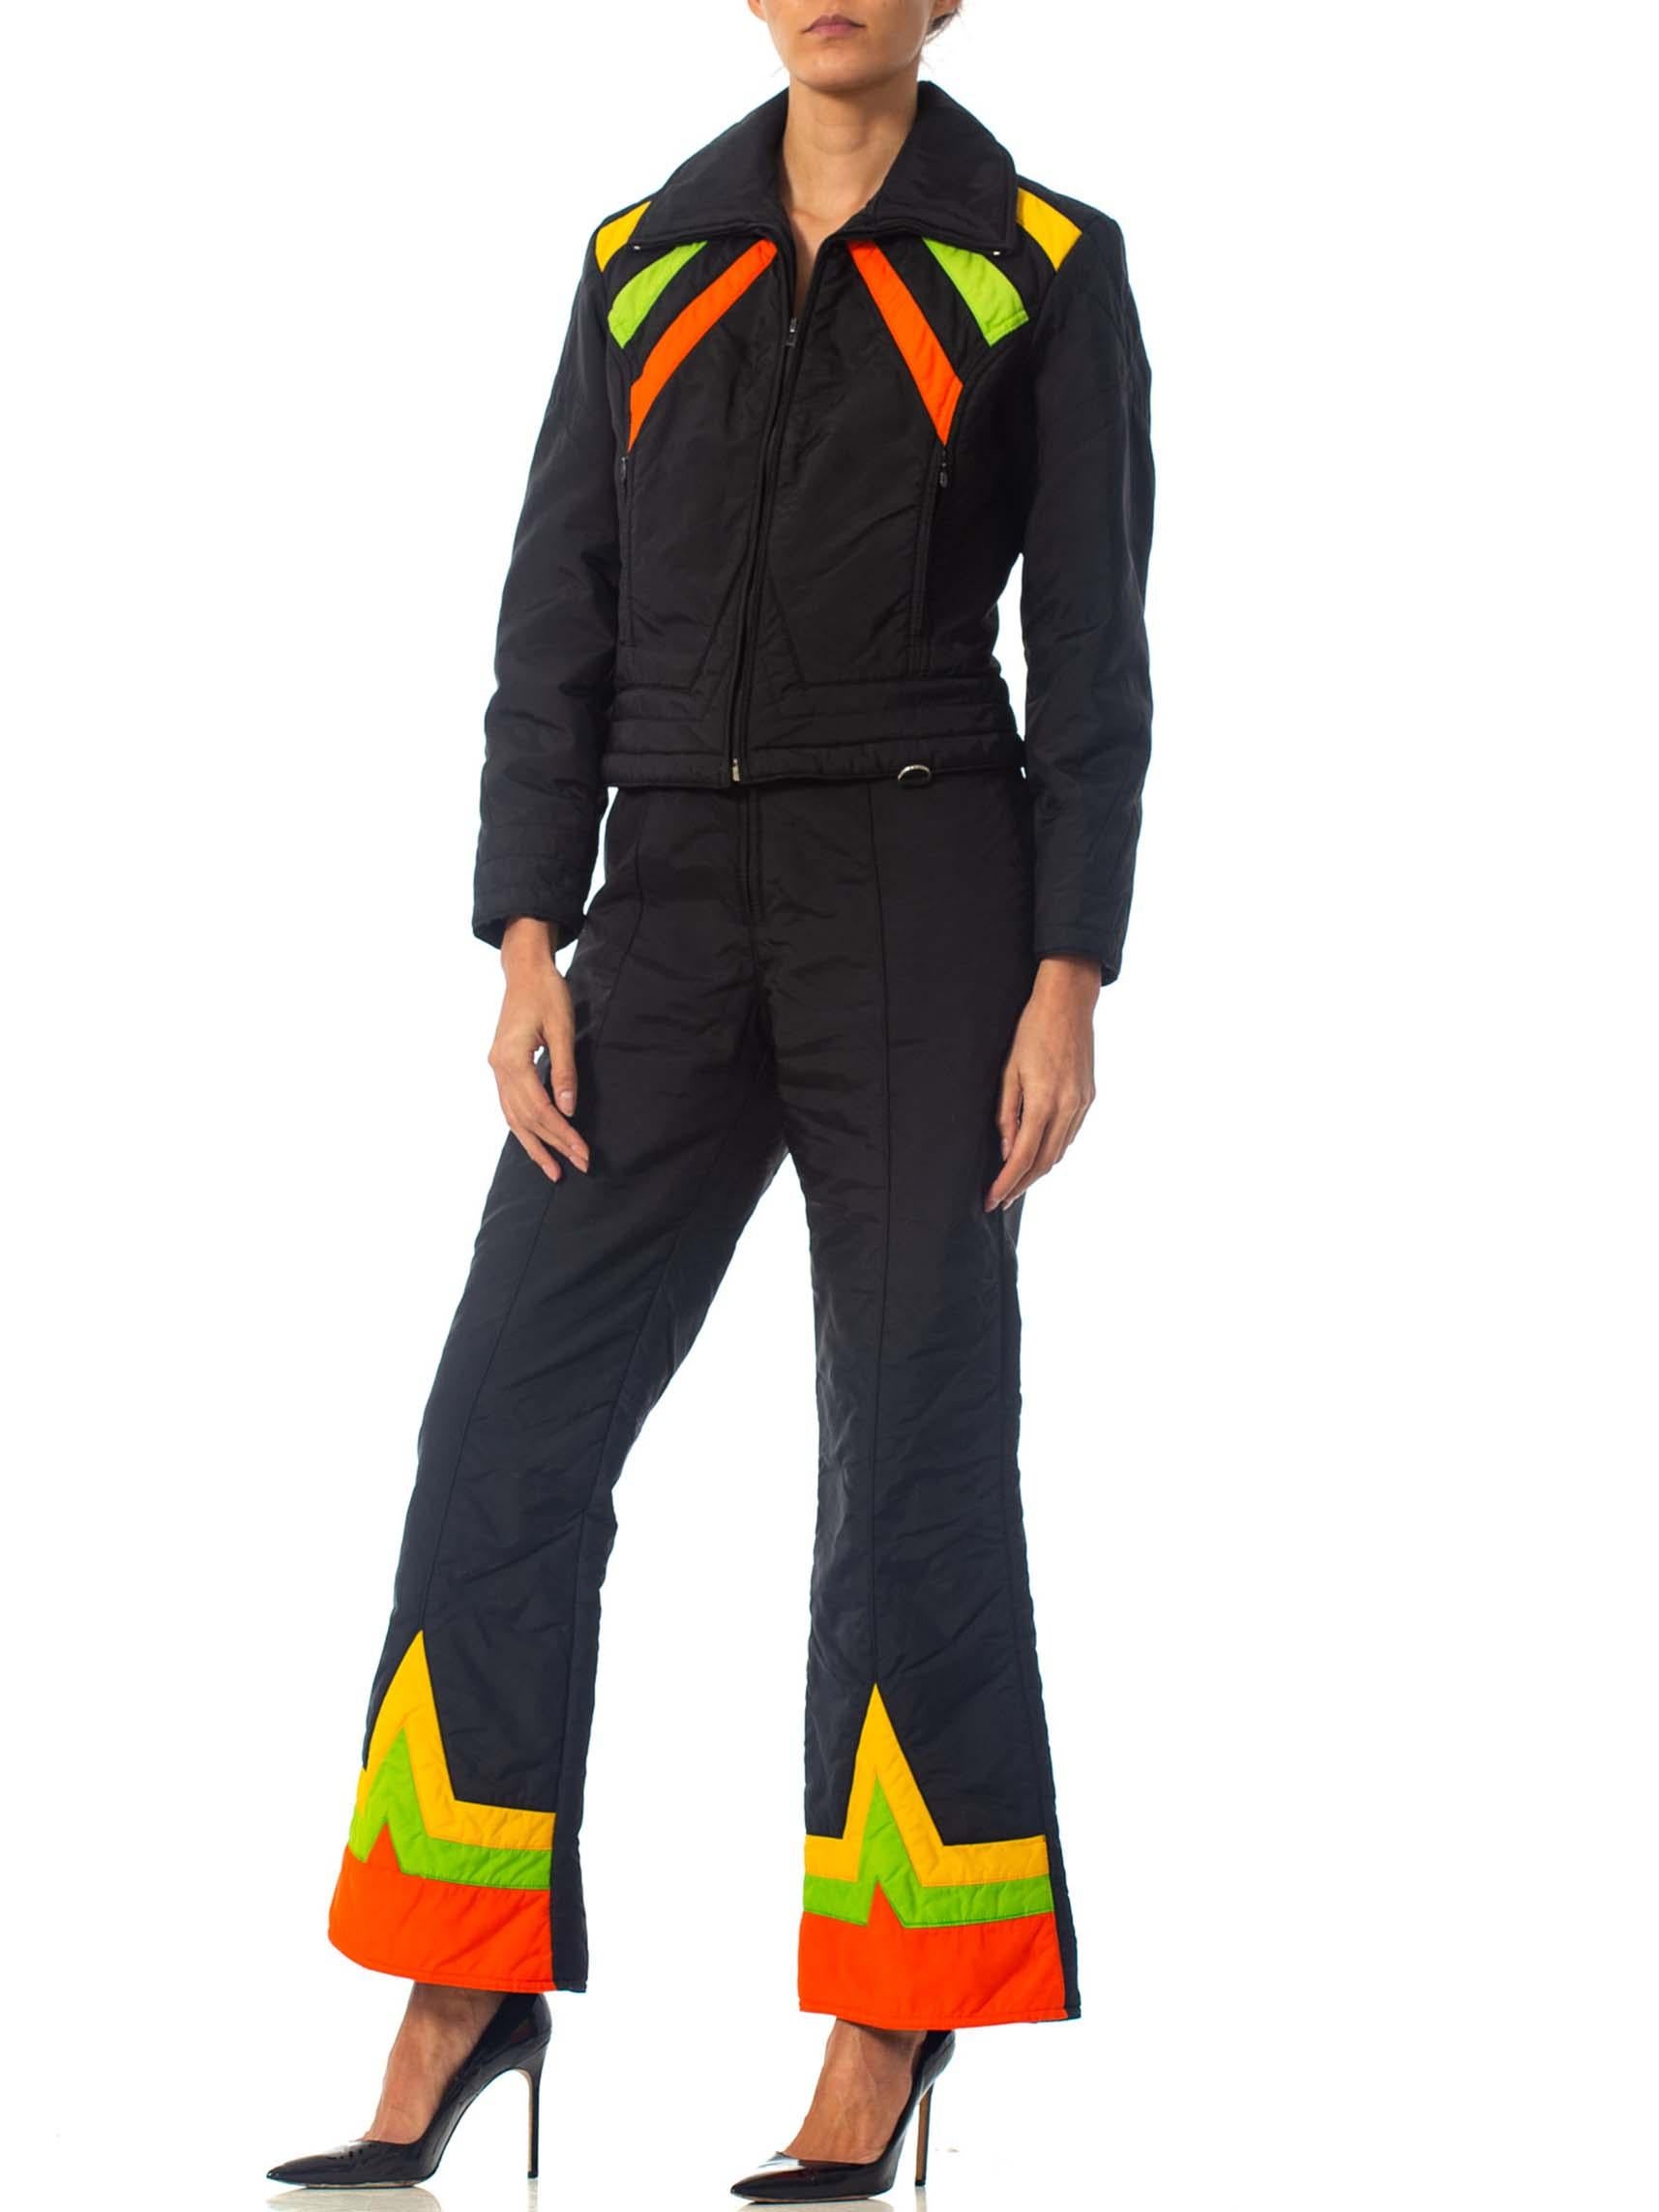 1970S Black Polyester Ski Wear Ensemble With Orange & Yellow Details 4